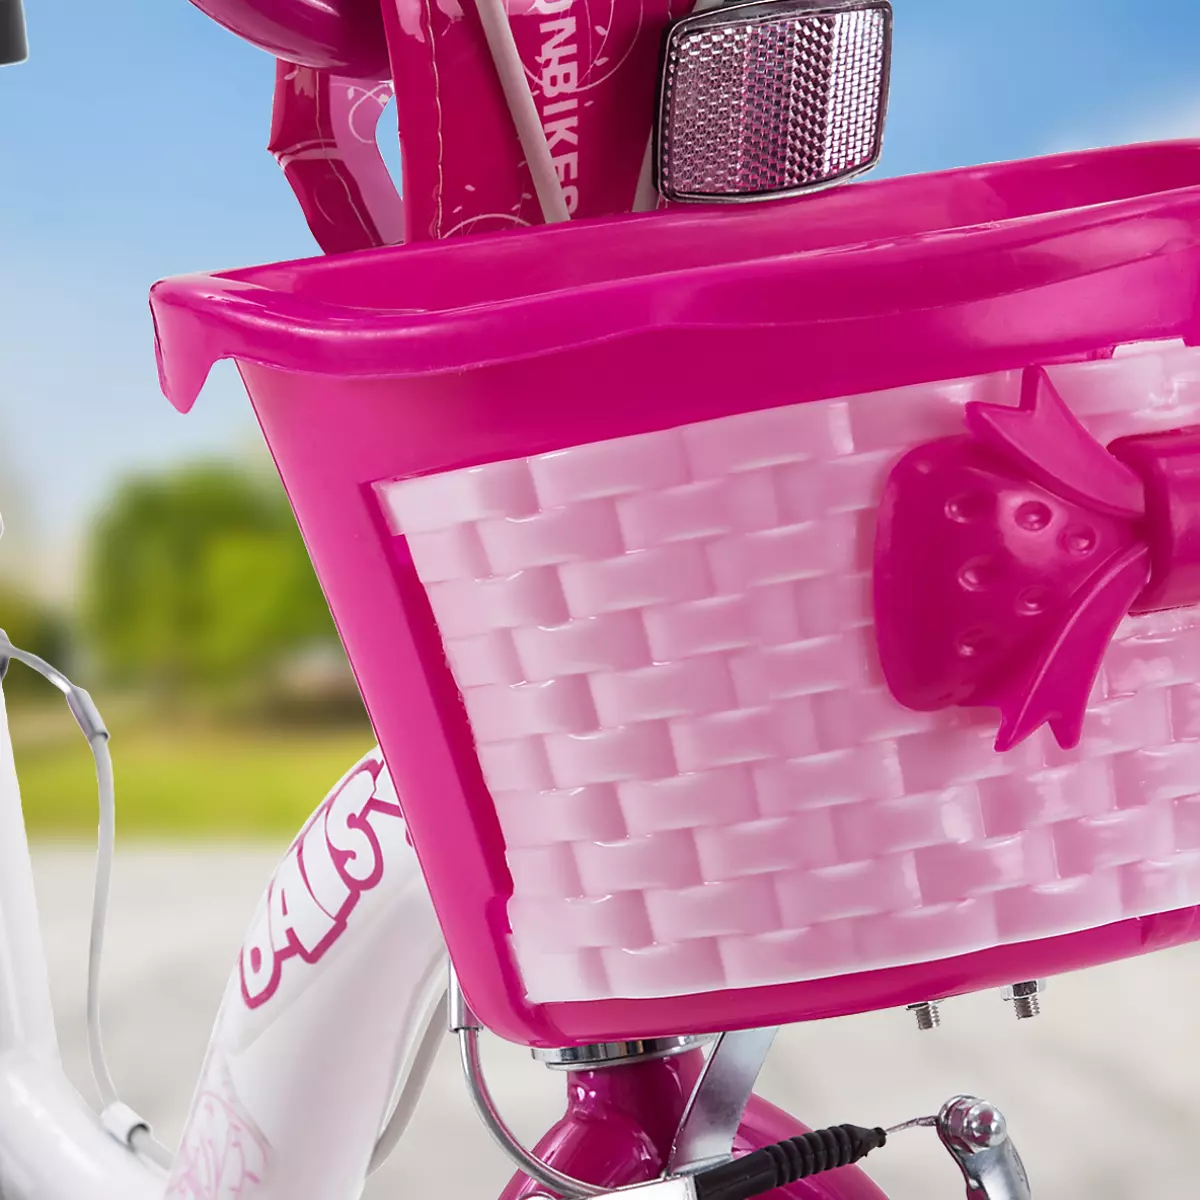 Pinker Fahrradkorb mit Schleife vorne am Kinderfahrrad